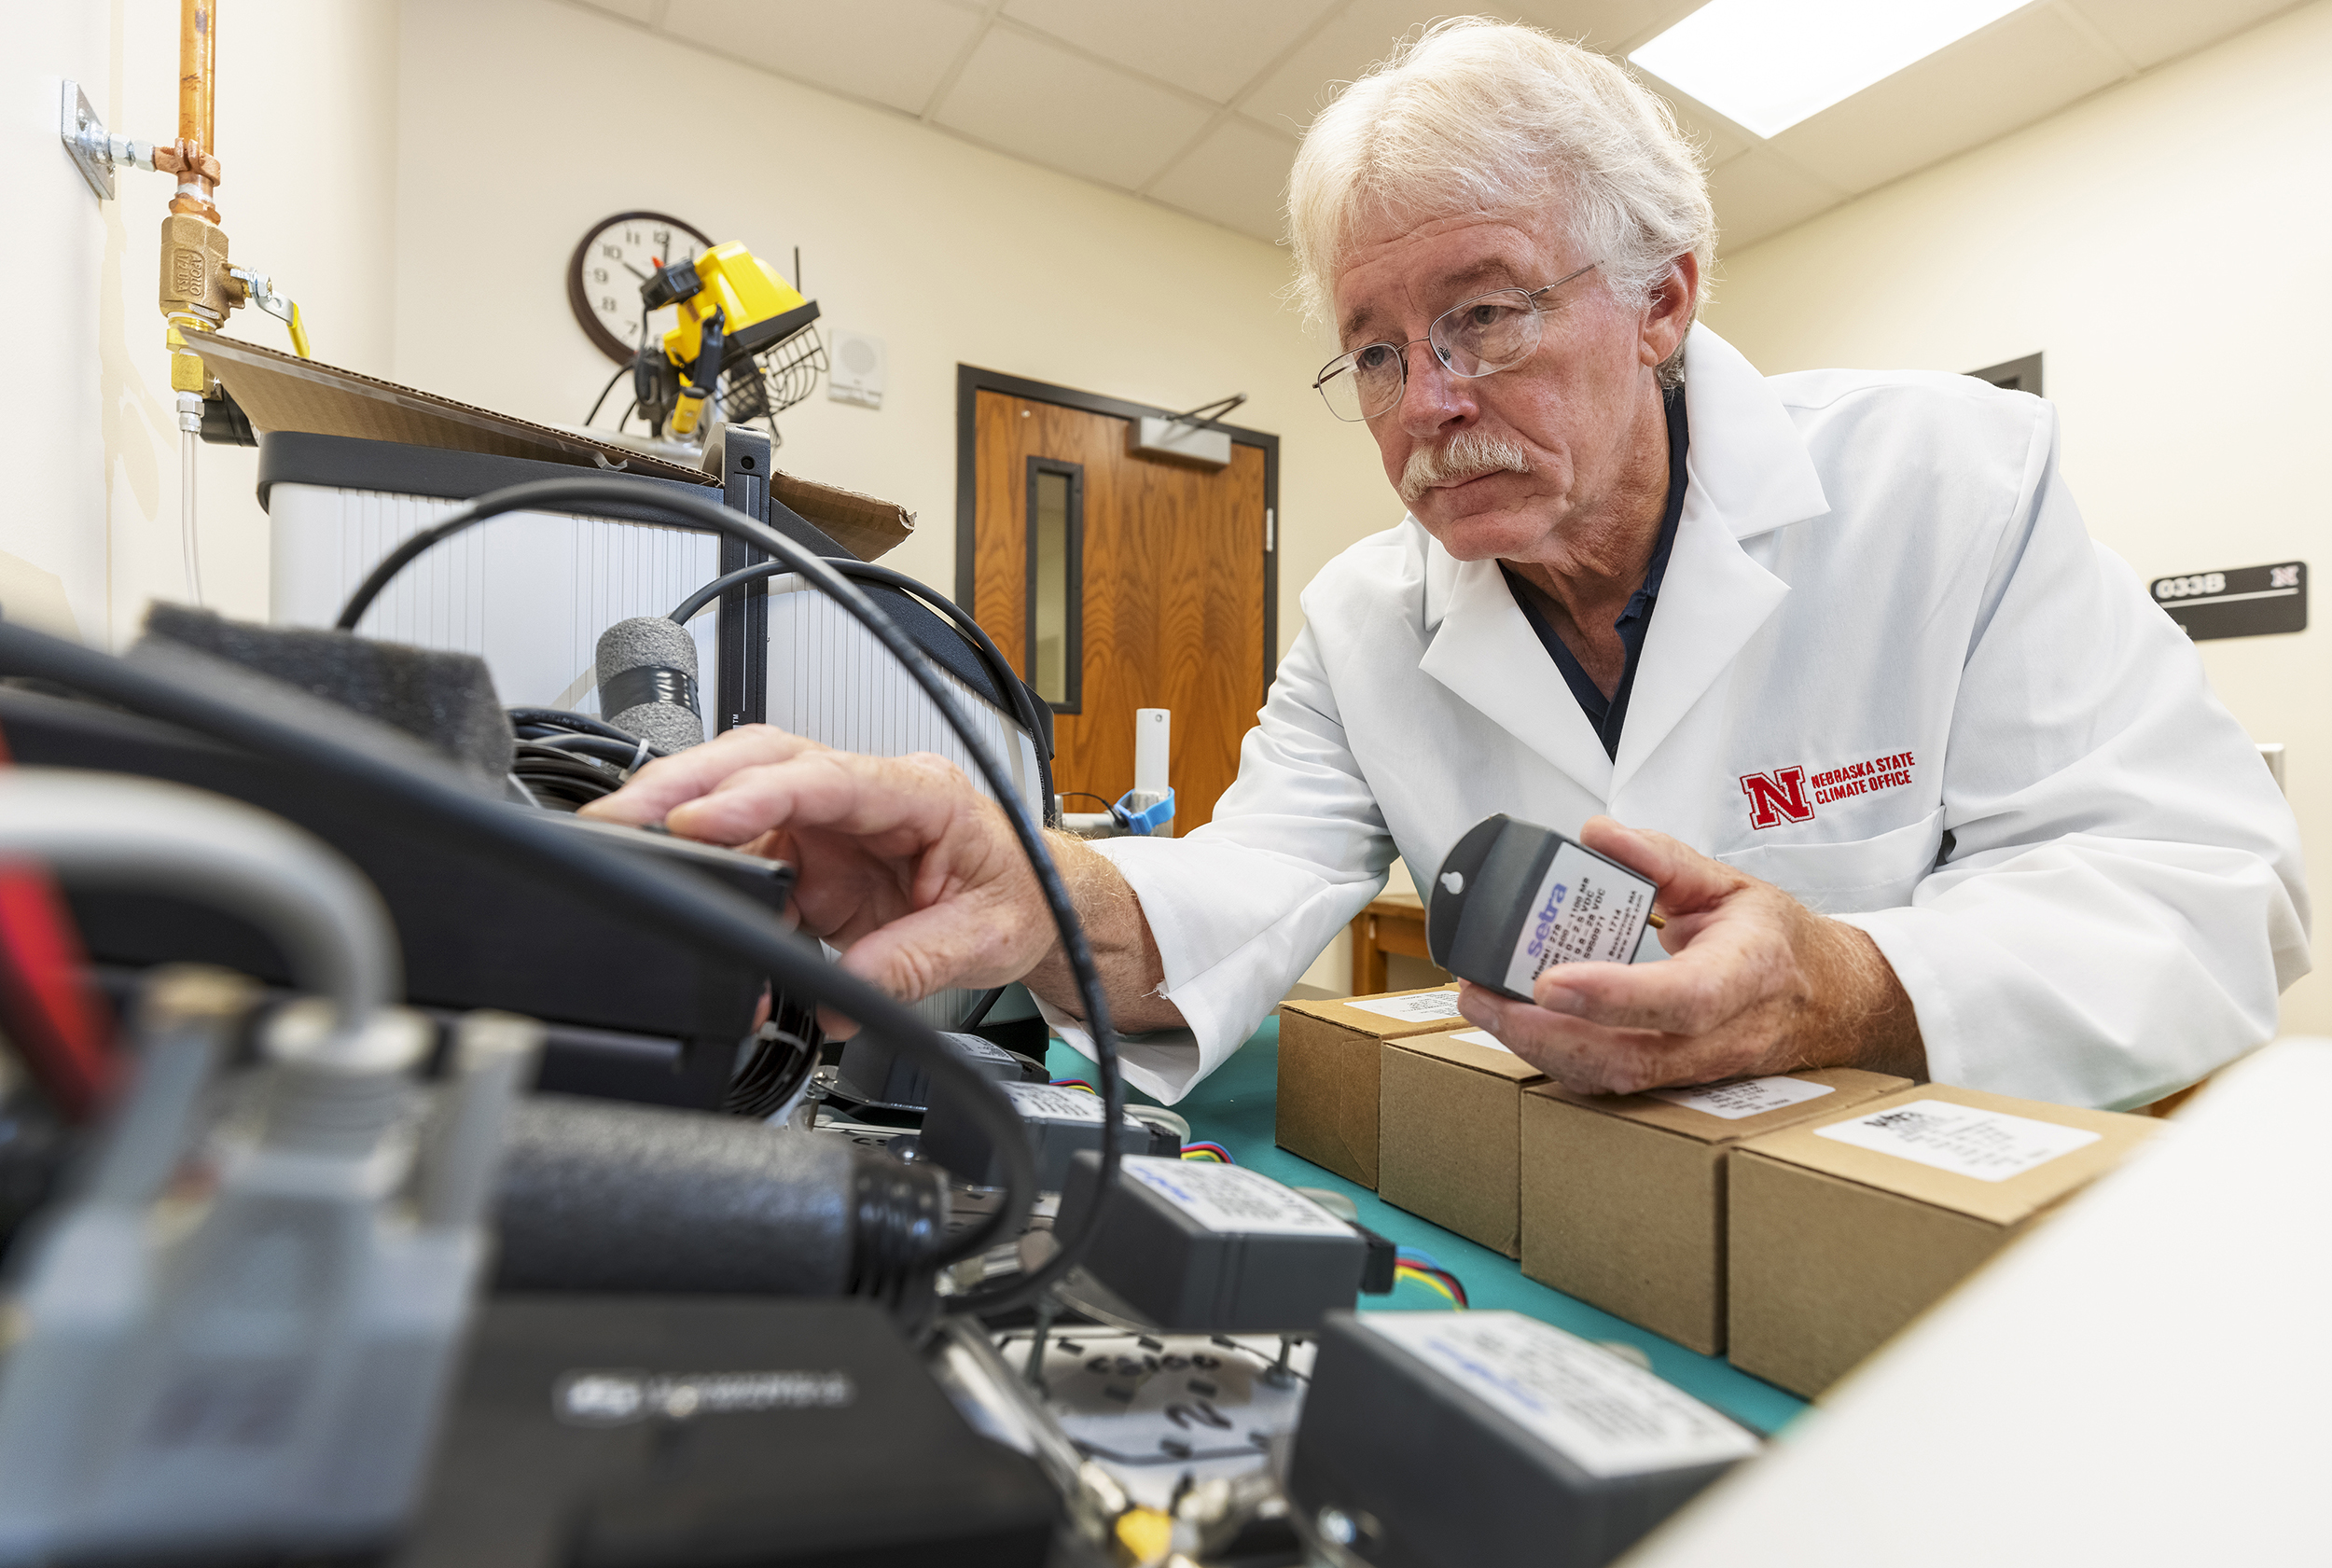 Senior Nebraska Mesonet technician Glen Roebke runs tests on a set of weather station barometers. A new sensor calibration lab has been developed by the Nebraska State Climate Office in Nebraska’s School of Natural Resources.